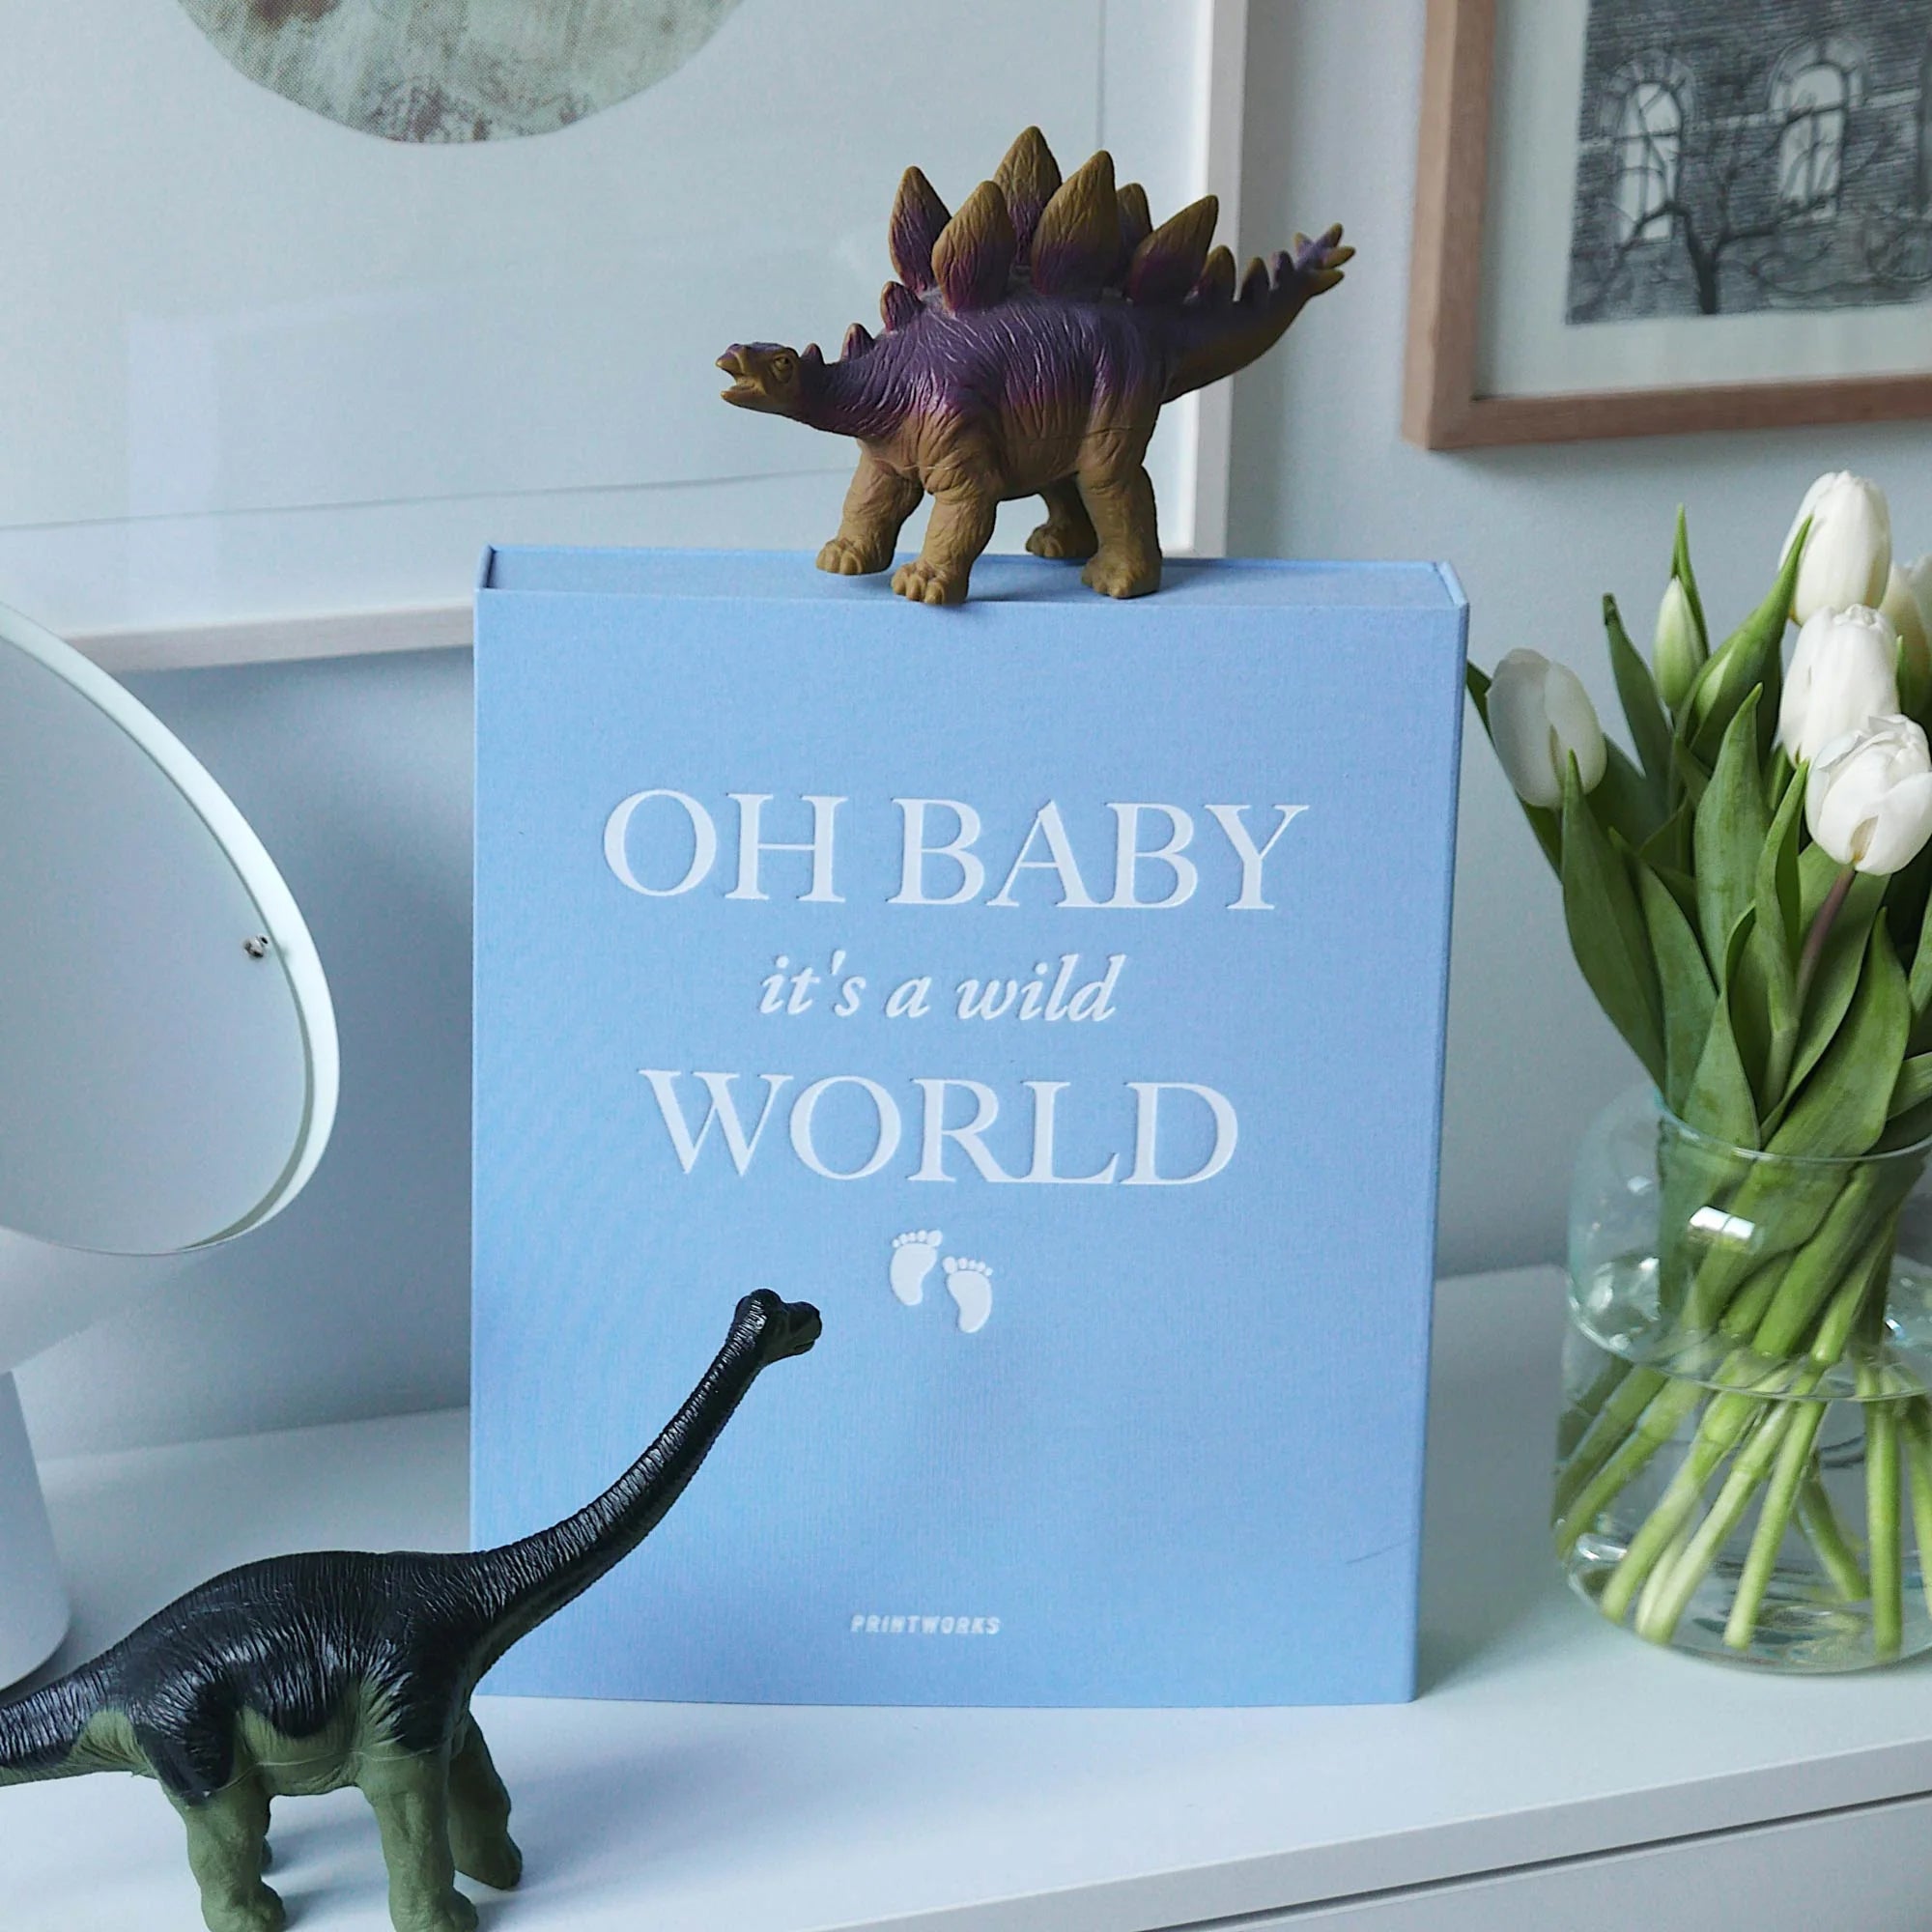 Fotoalbum Baby, it's a wild word Lichtblauw│Printworks│art. PW00520│staand op kast met dinosaurussen